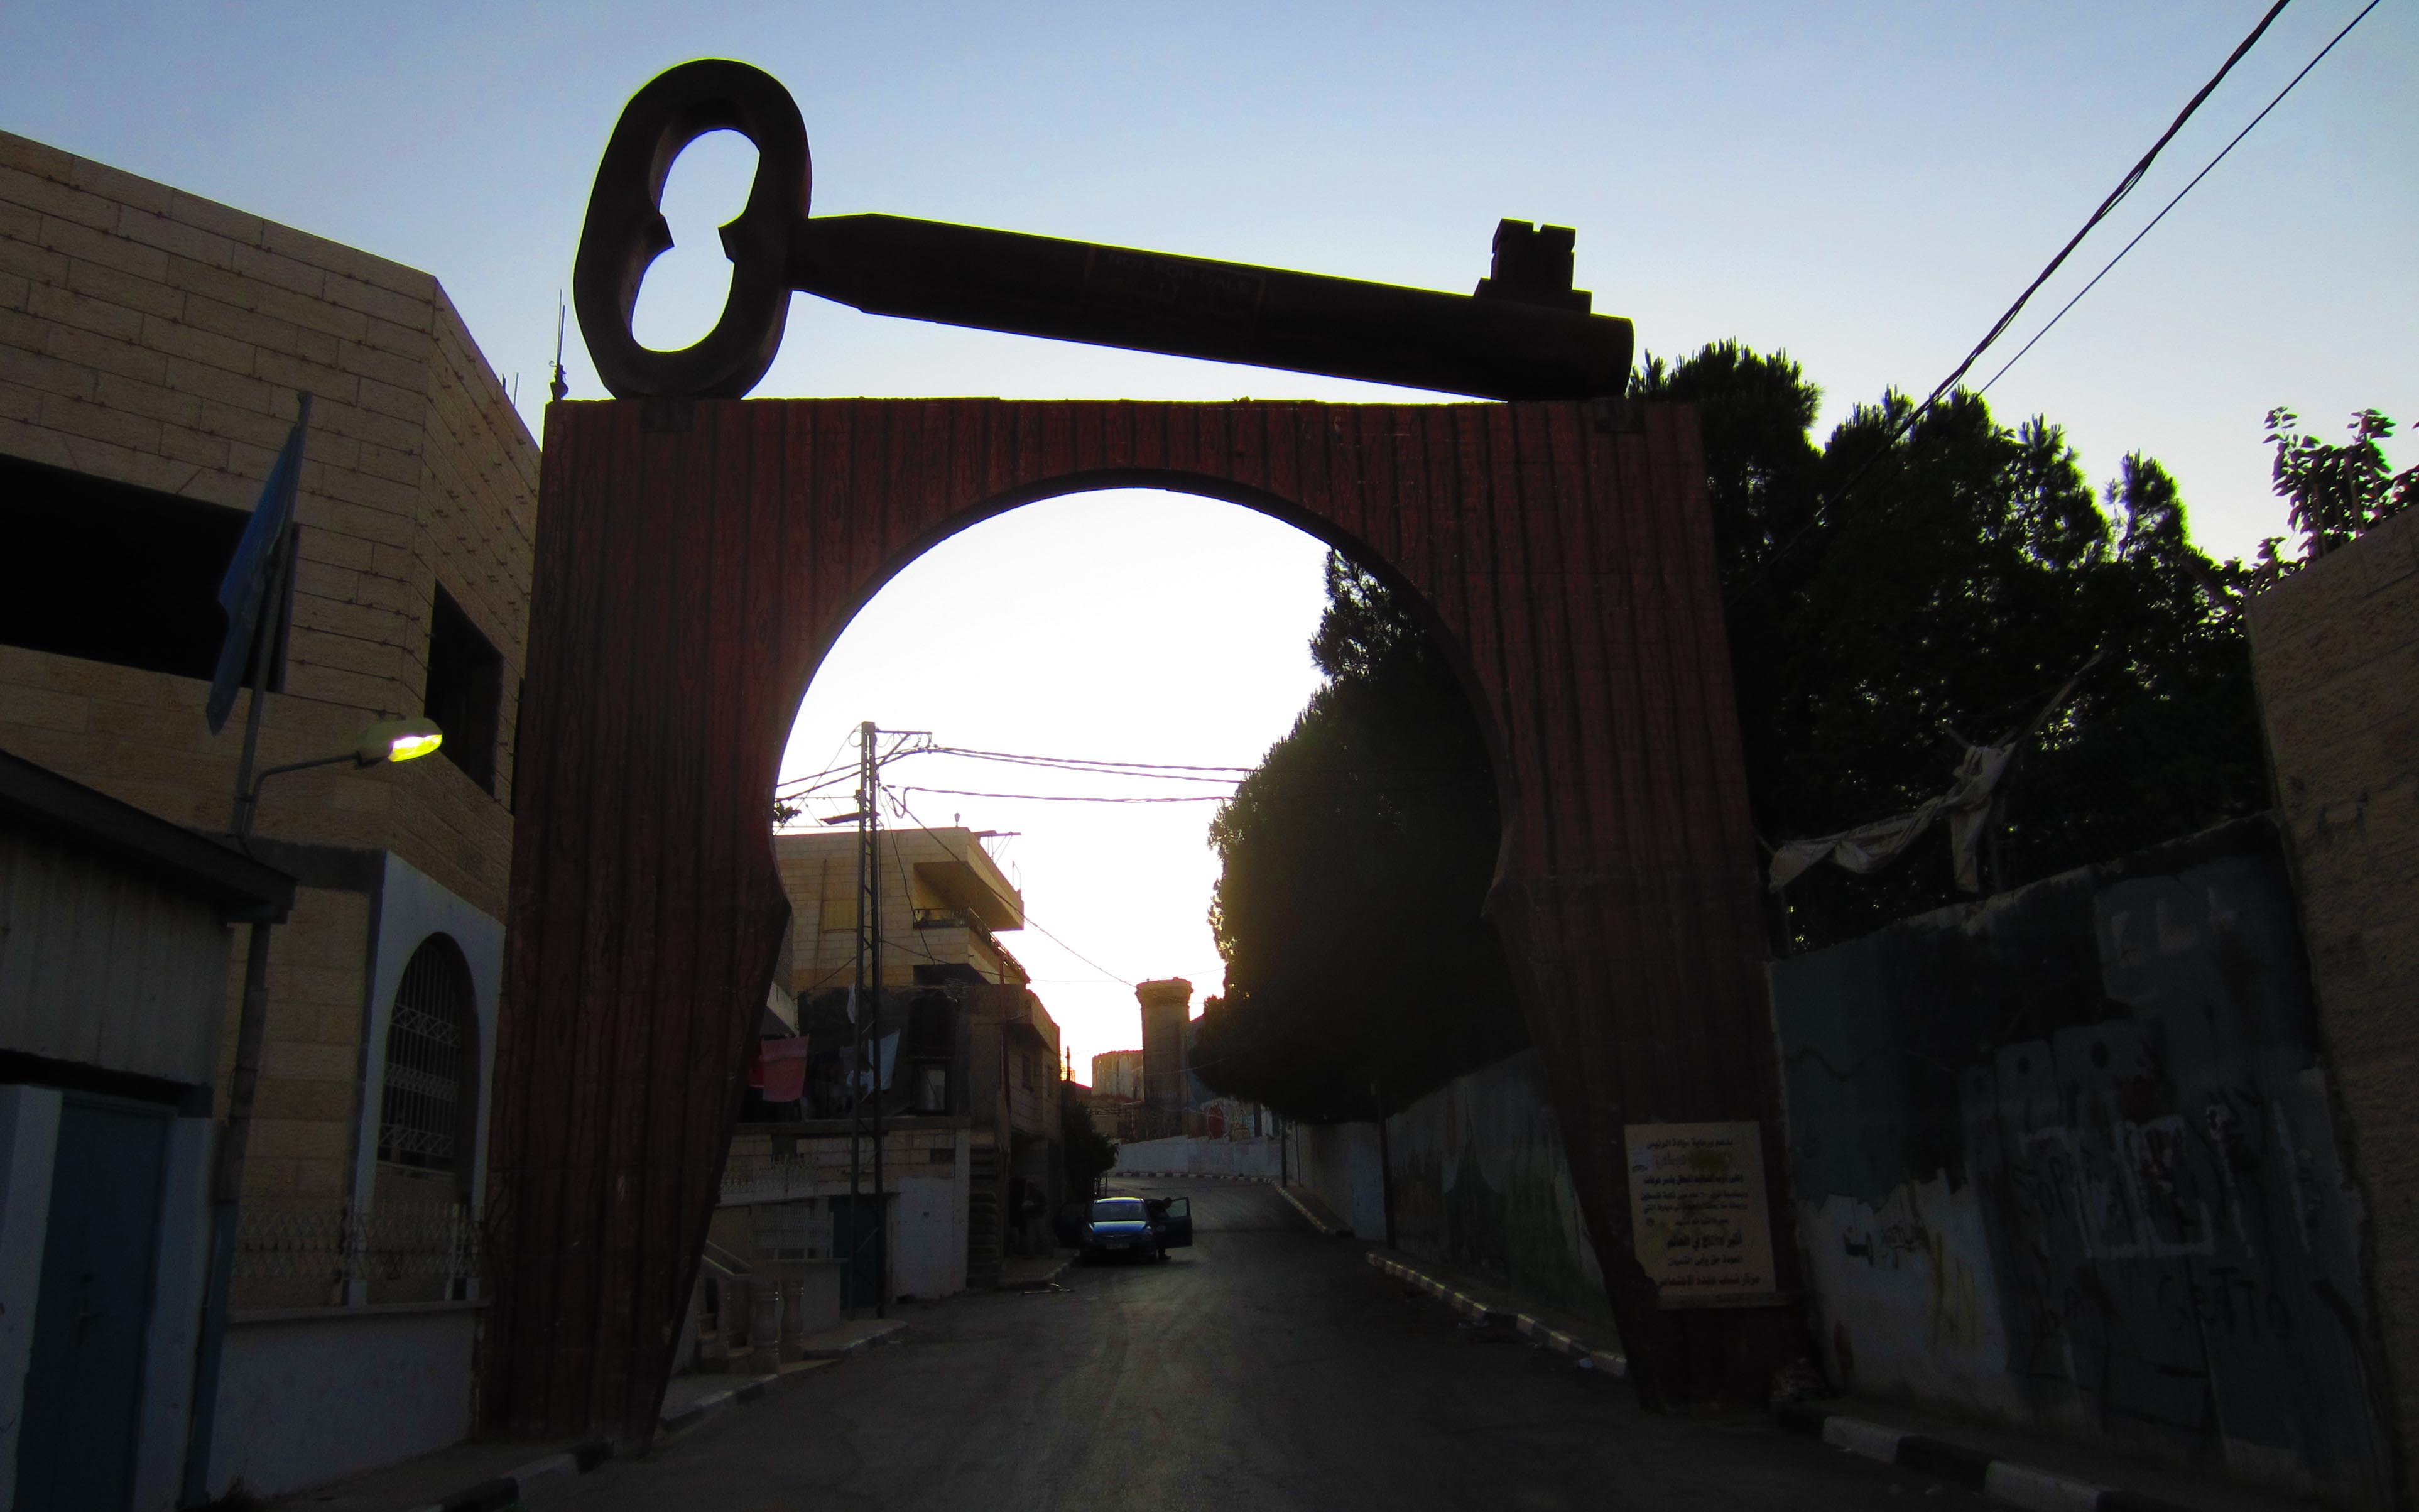 Key of Return at the entrance of Aida refugee camp